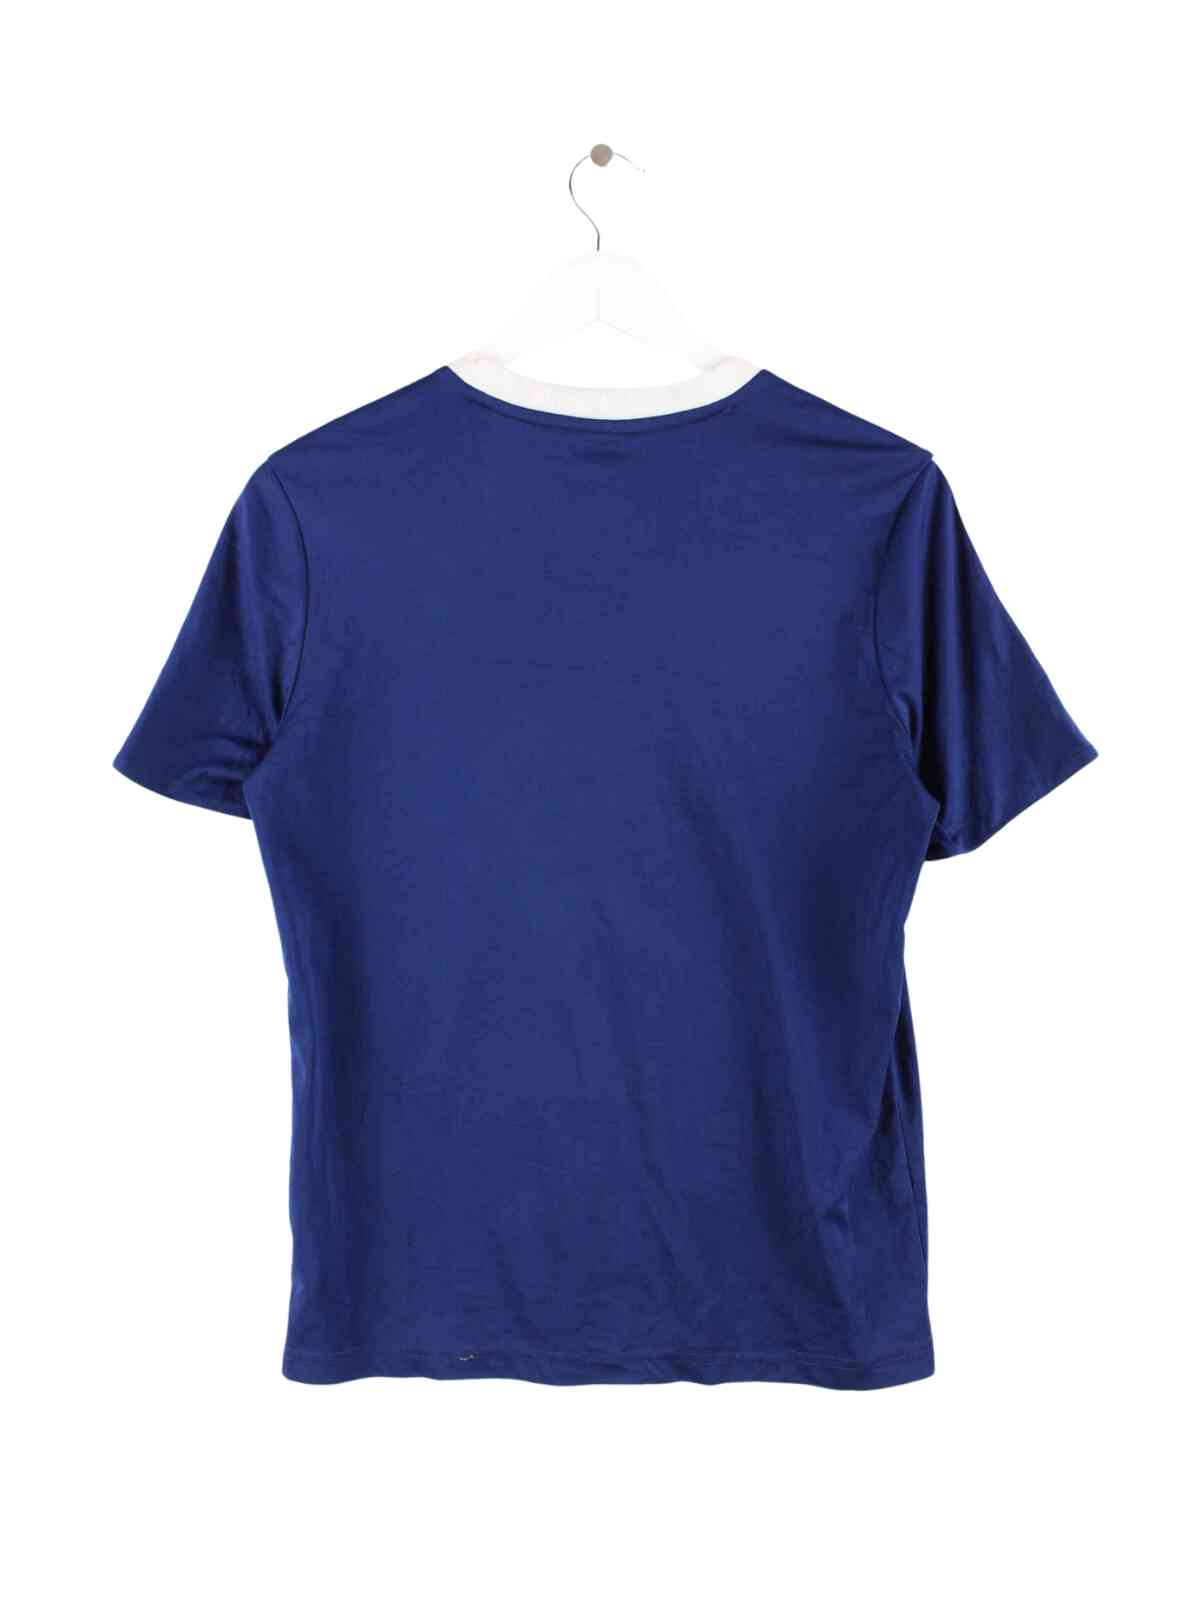 Adidas Sport T-Shirt Blau S